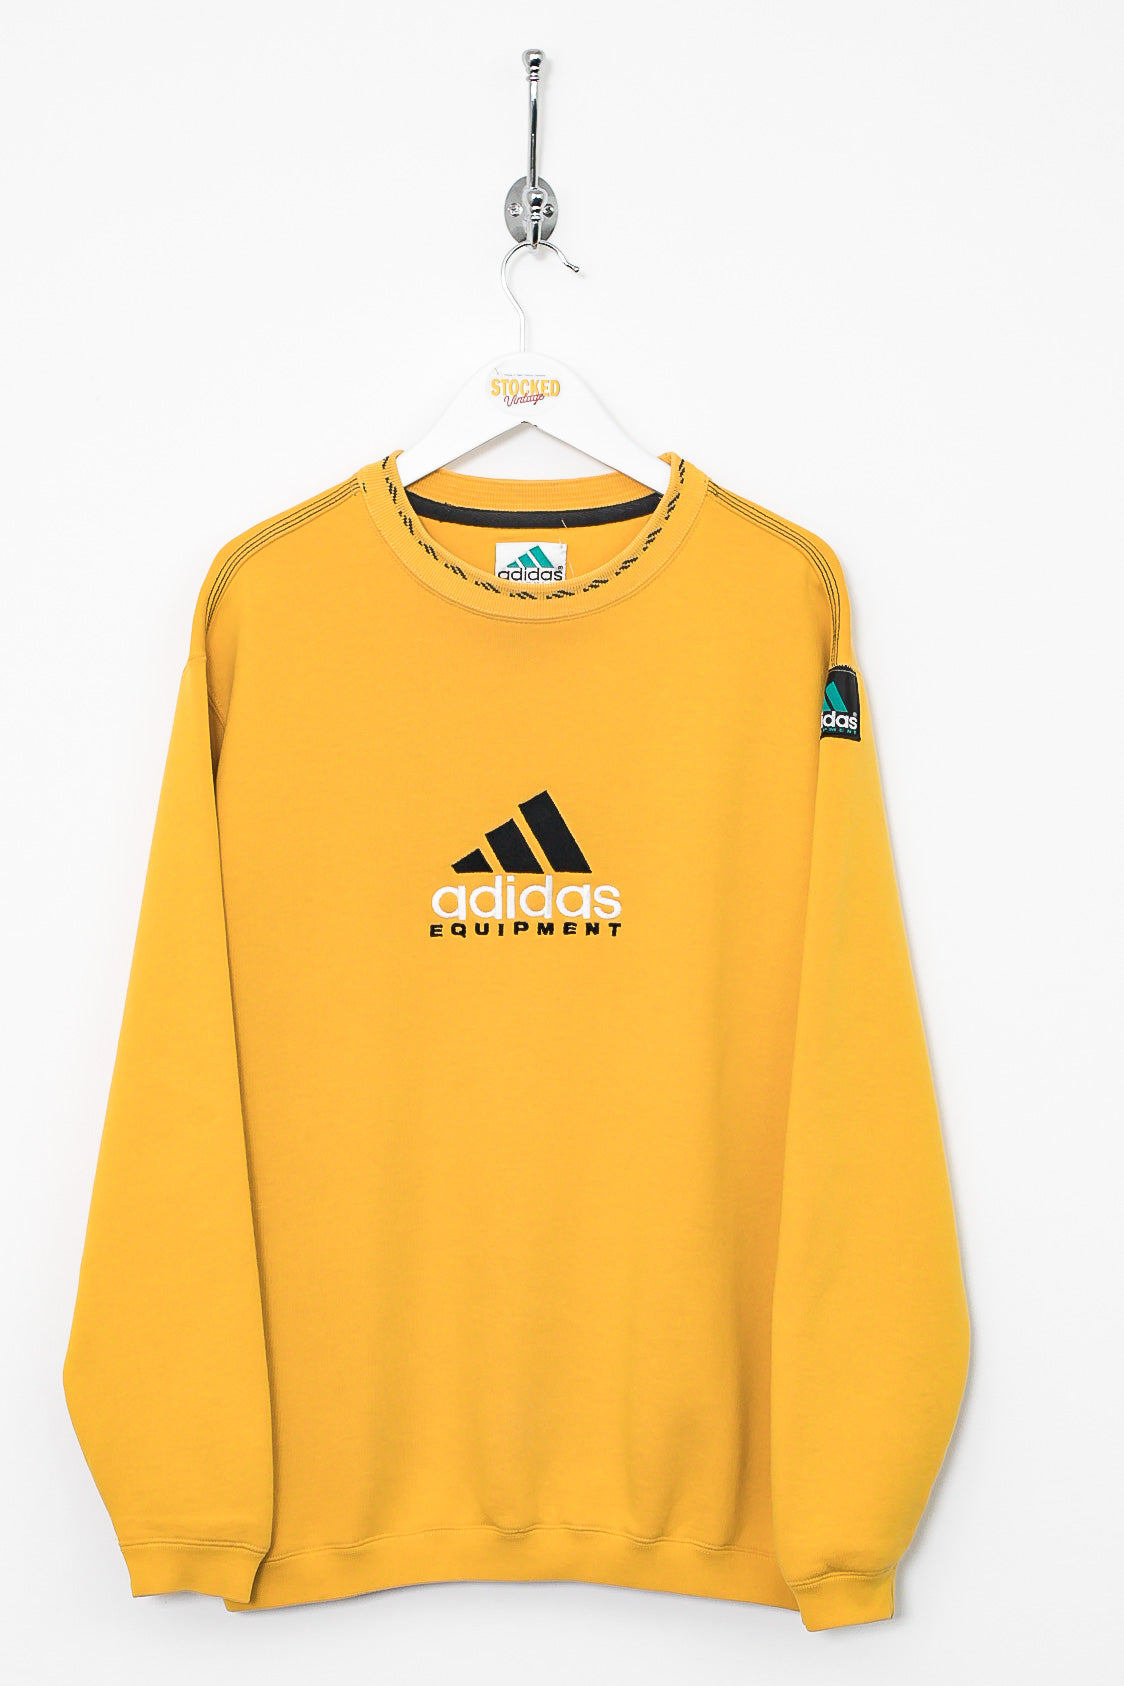 90s Adidas Equipment Sweatshirt (S)